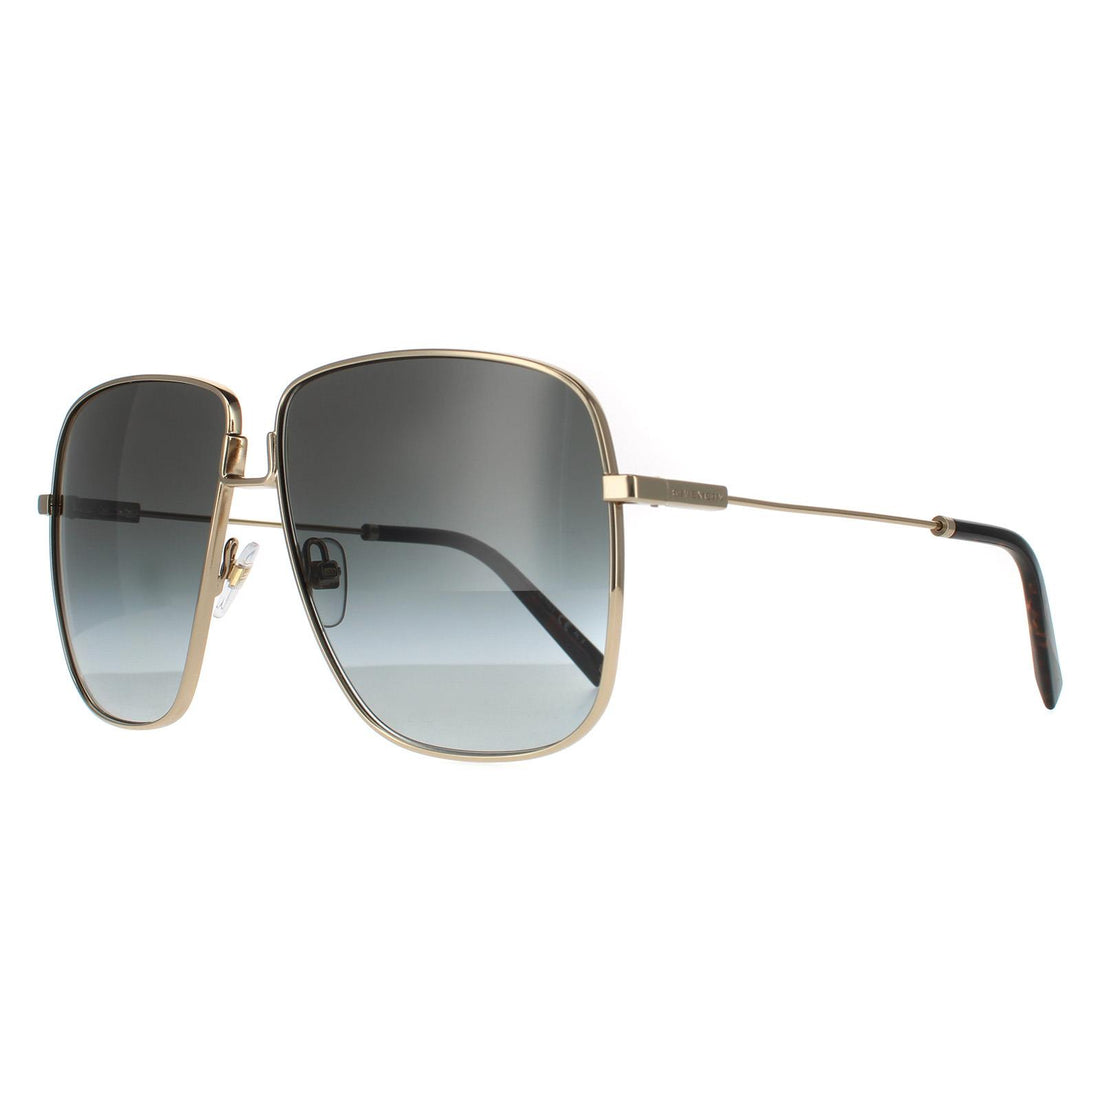 Givenchy Sunglasses GV7183/S J5G 9O Gold Grey Gradient